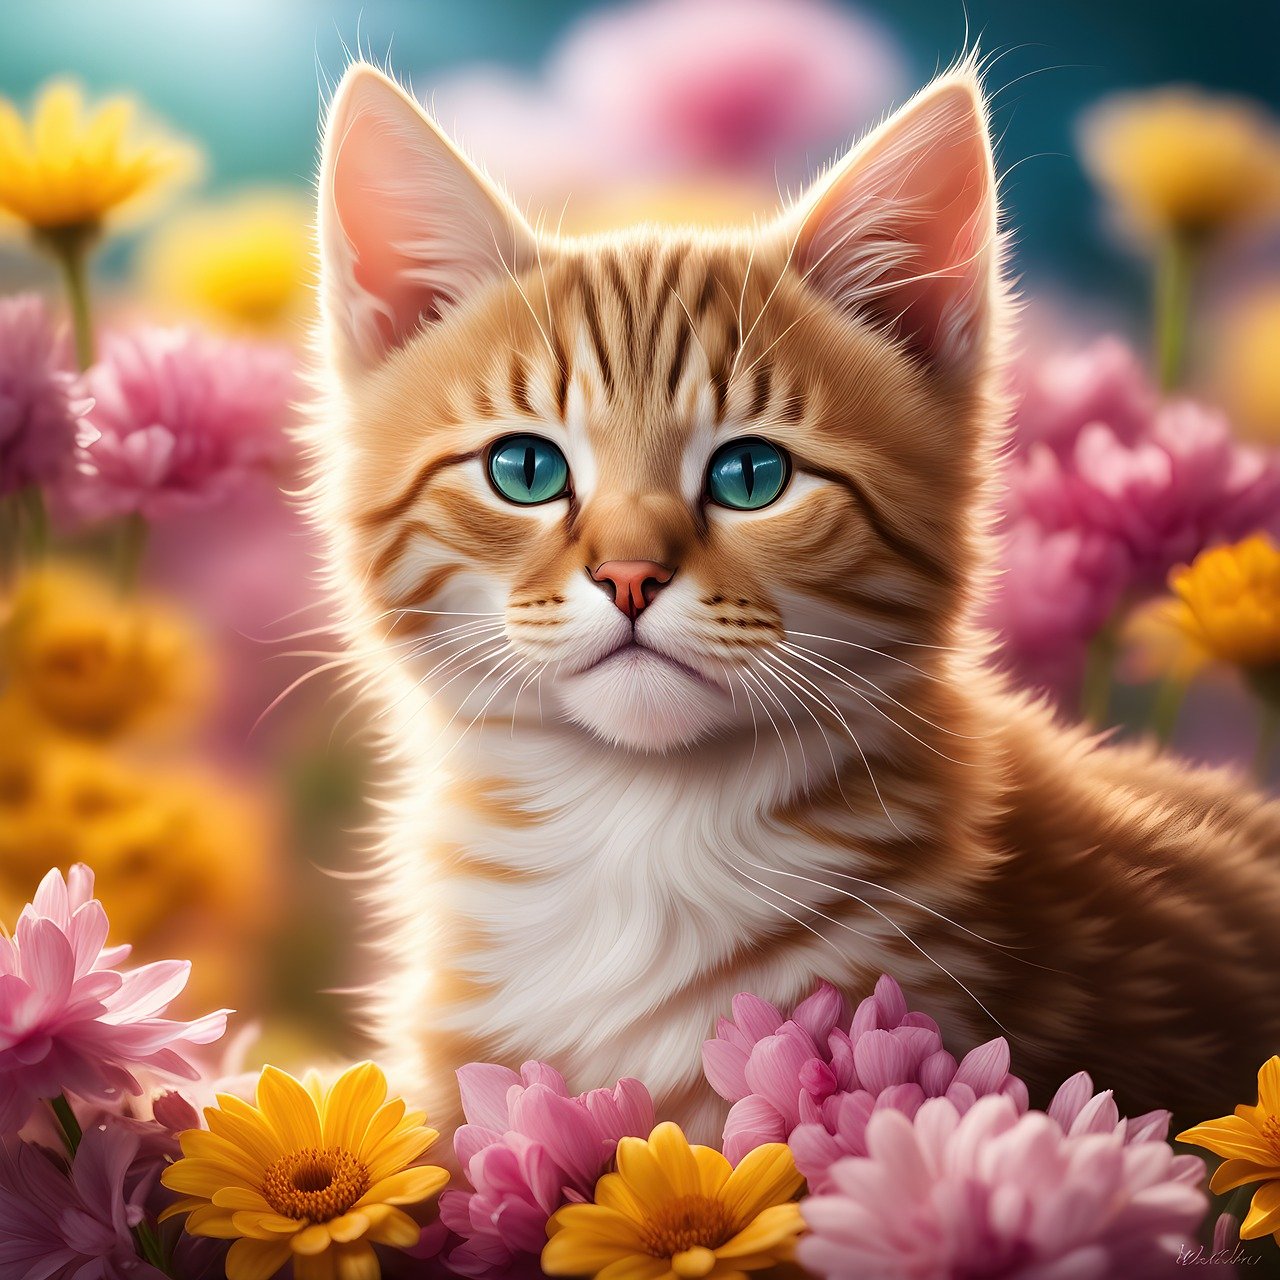 ai-generated-kitten-flowers-8485818